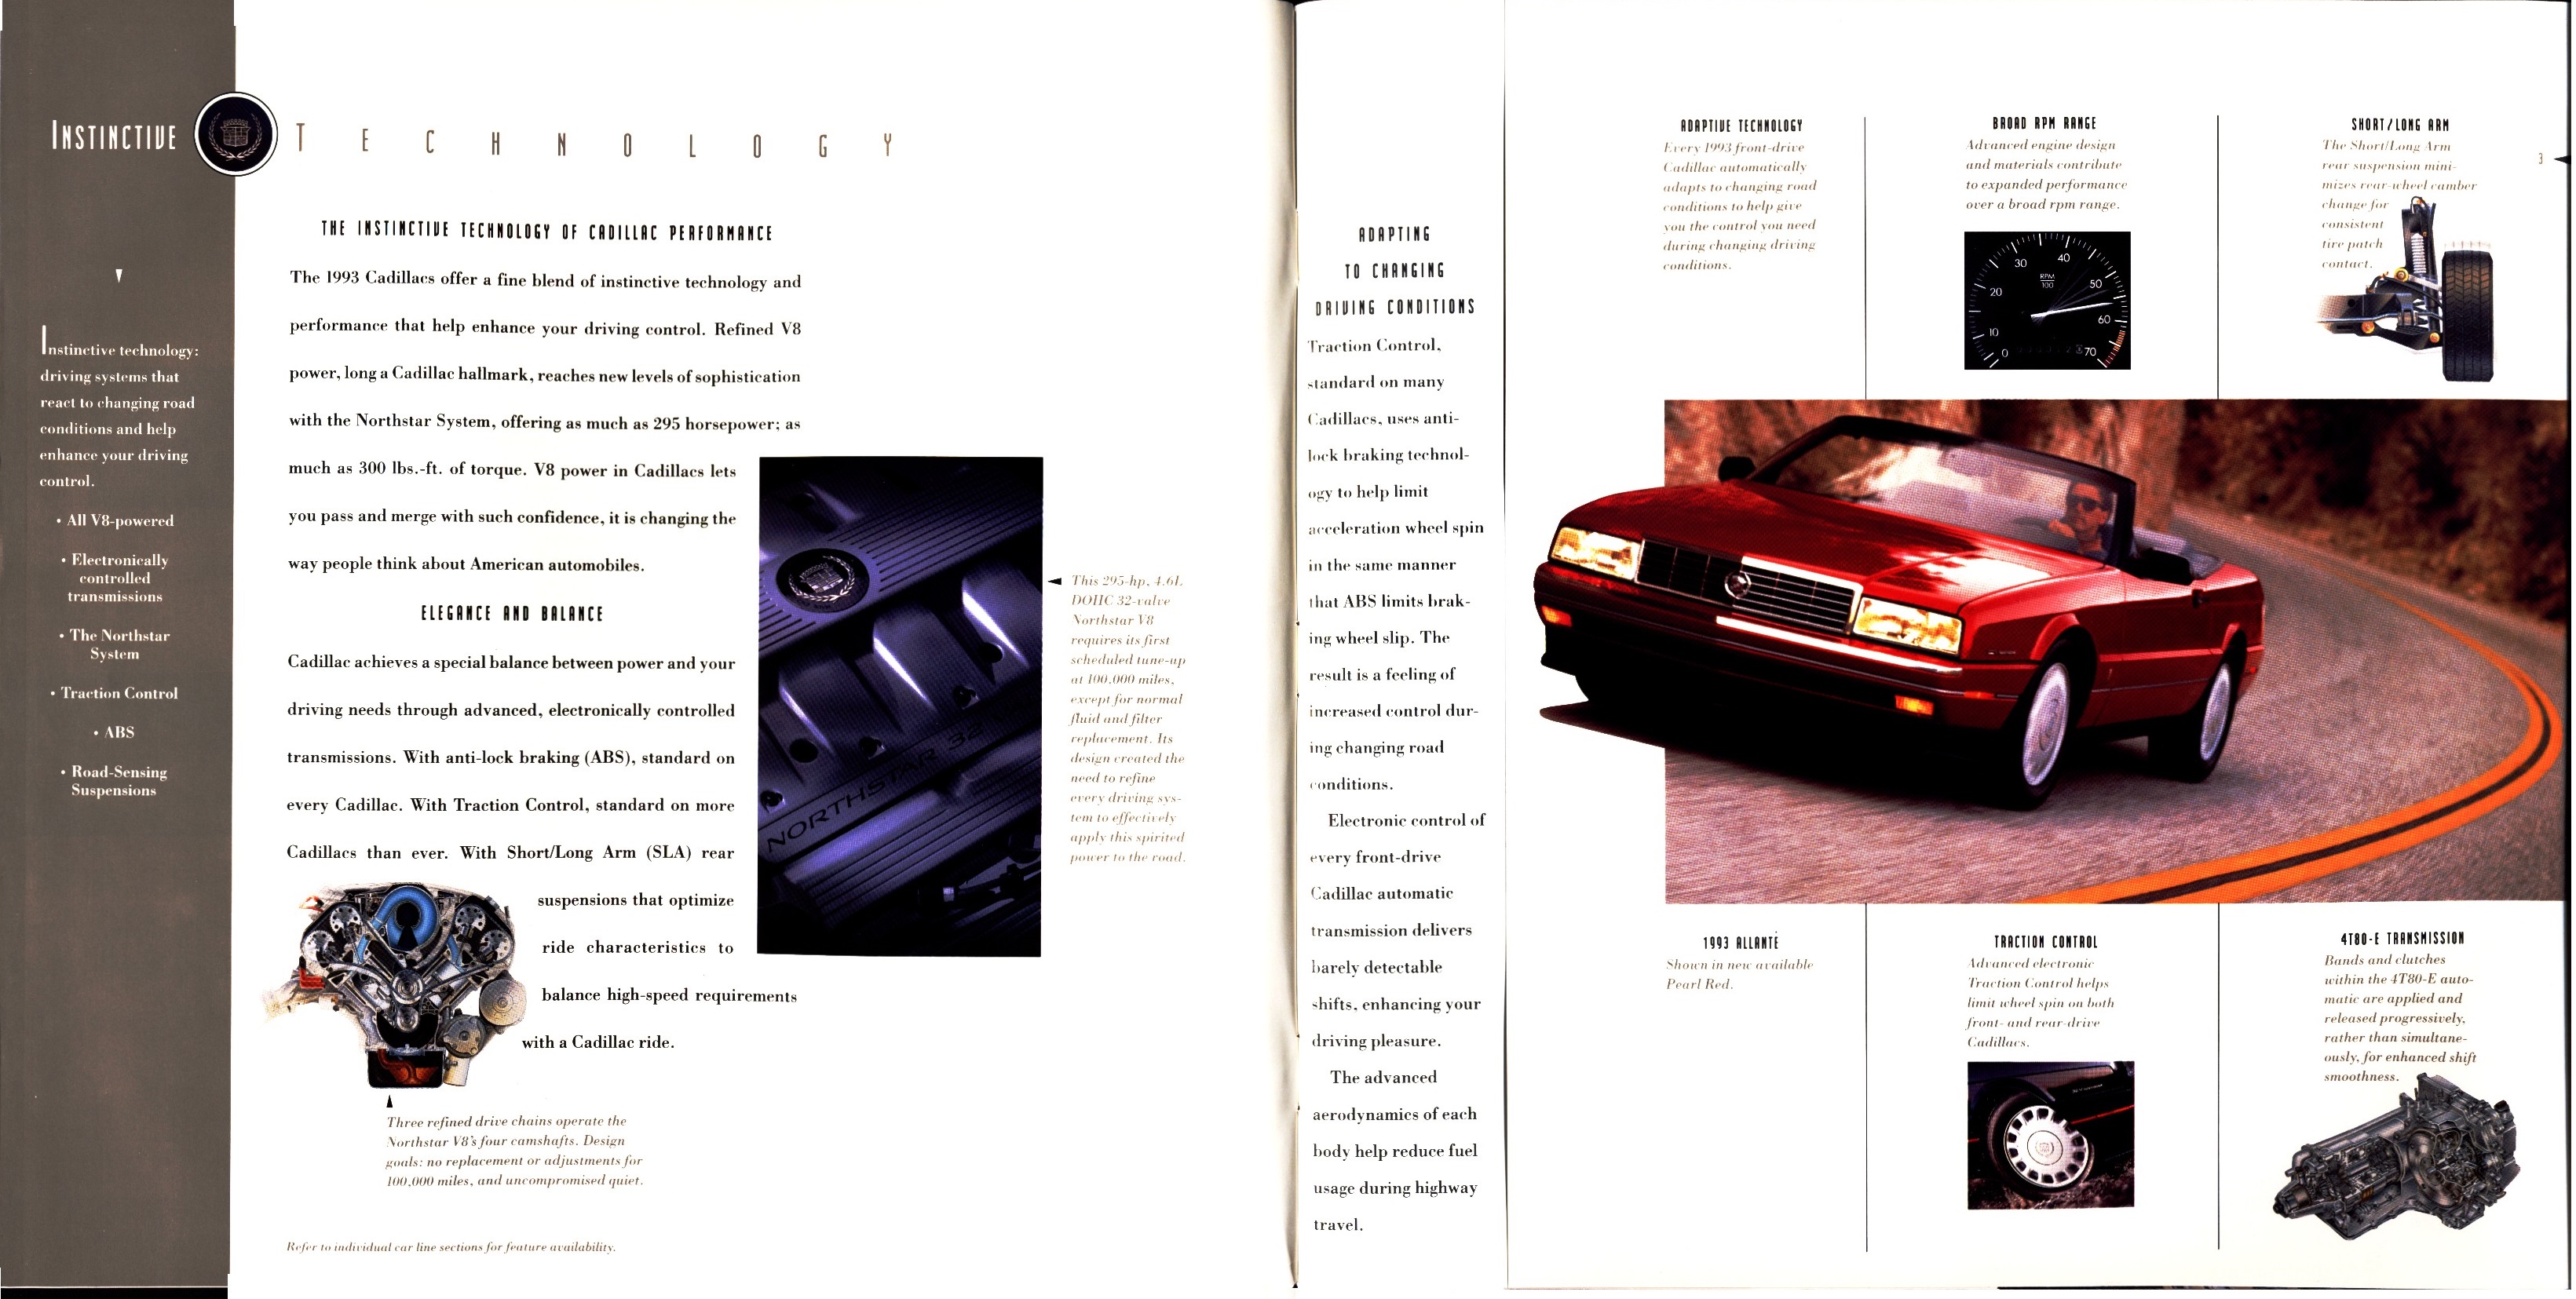 1993 Cadillac Full Line Prestige Brochure 02a-03